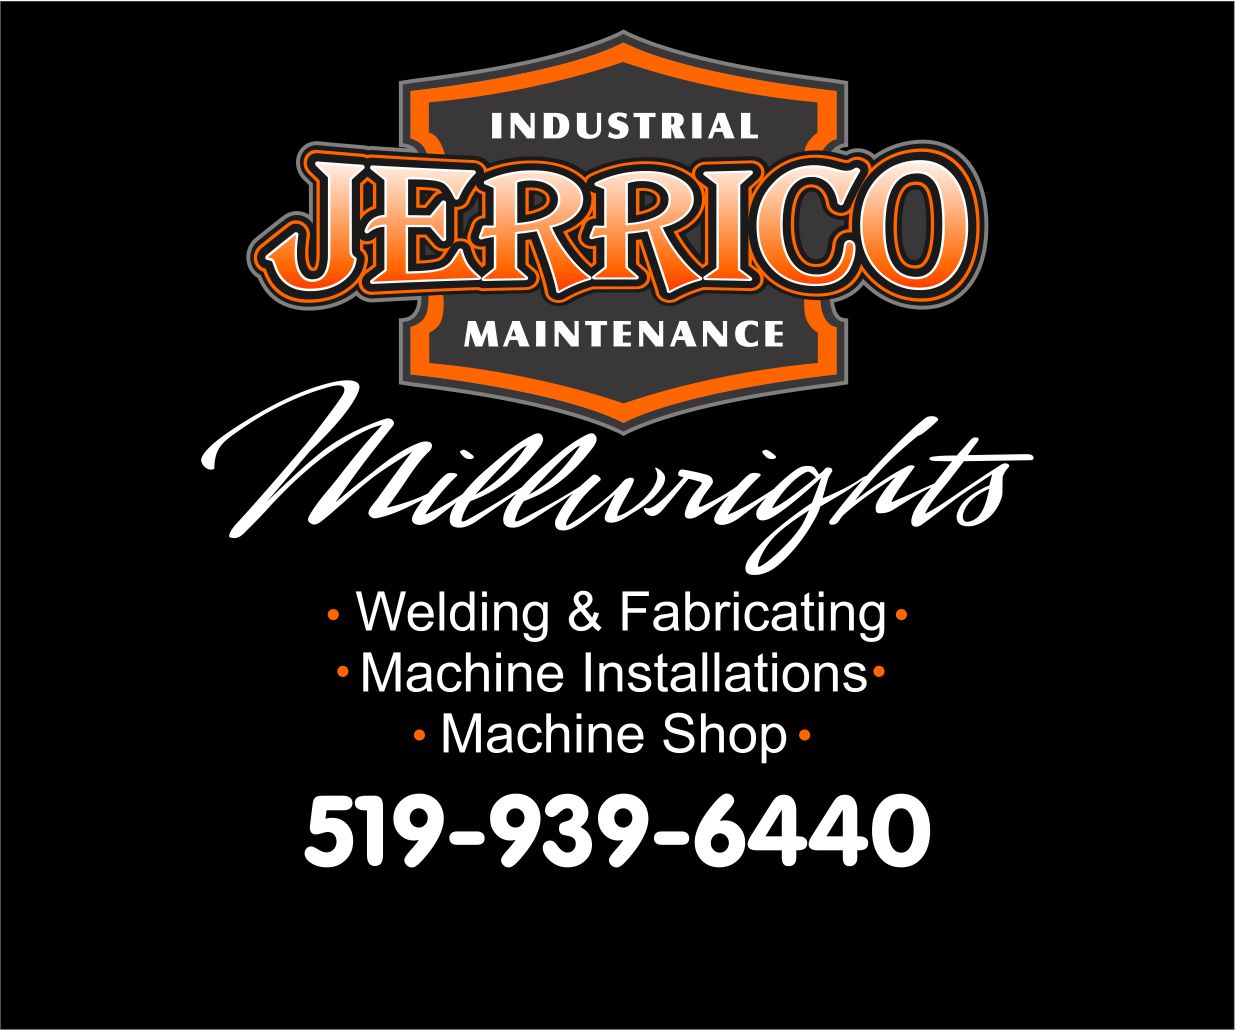 Jerrico Industrial Maintenance